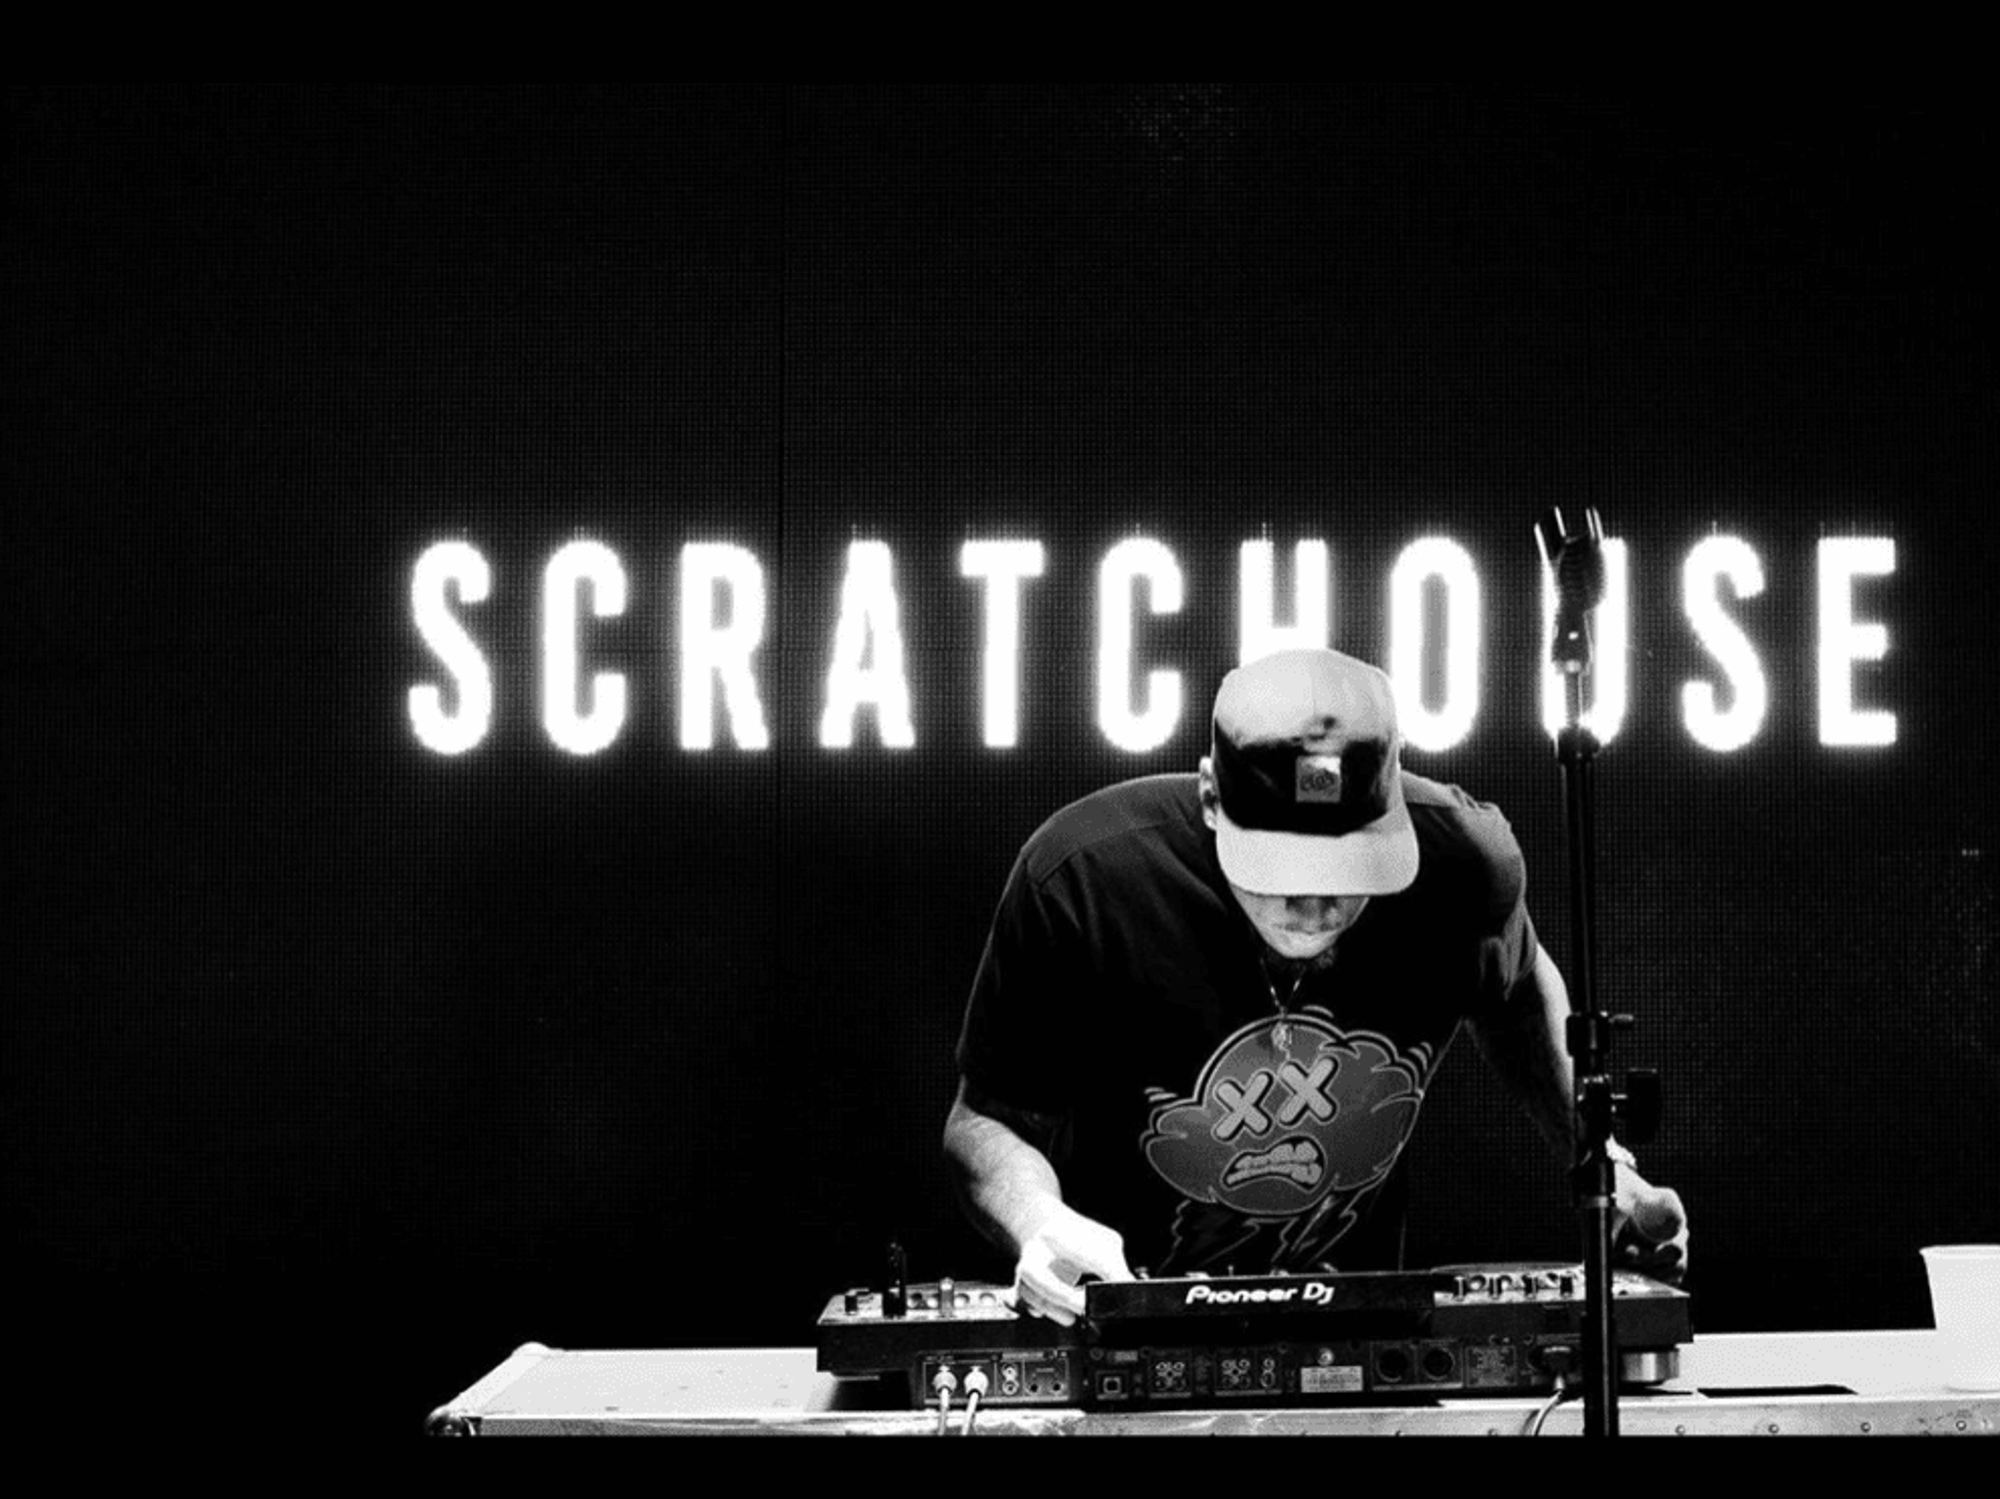 Scratchouse DJ